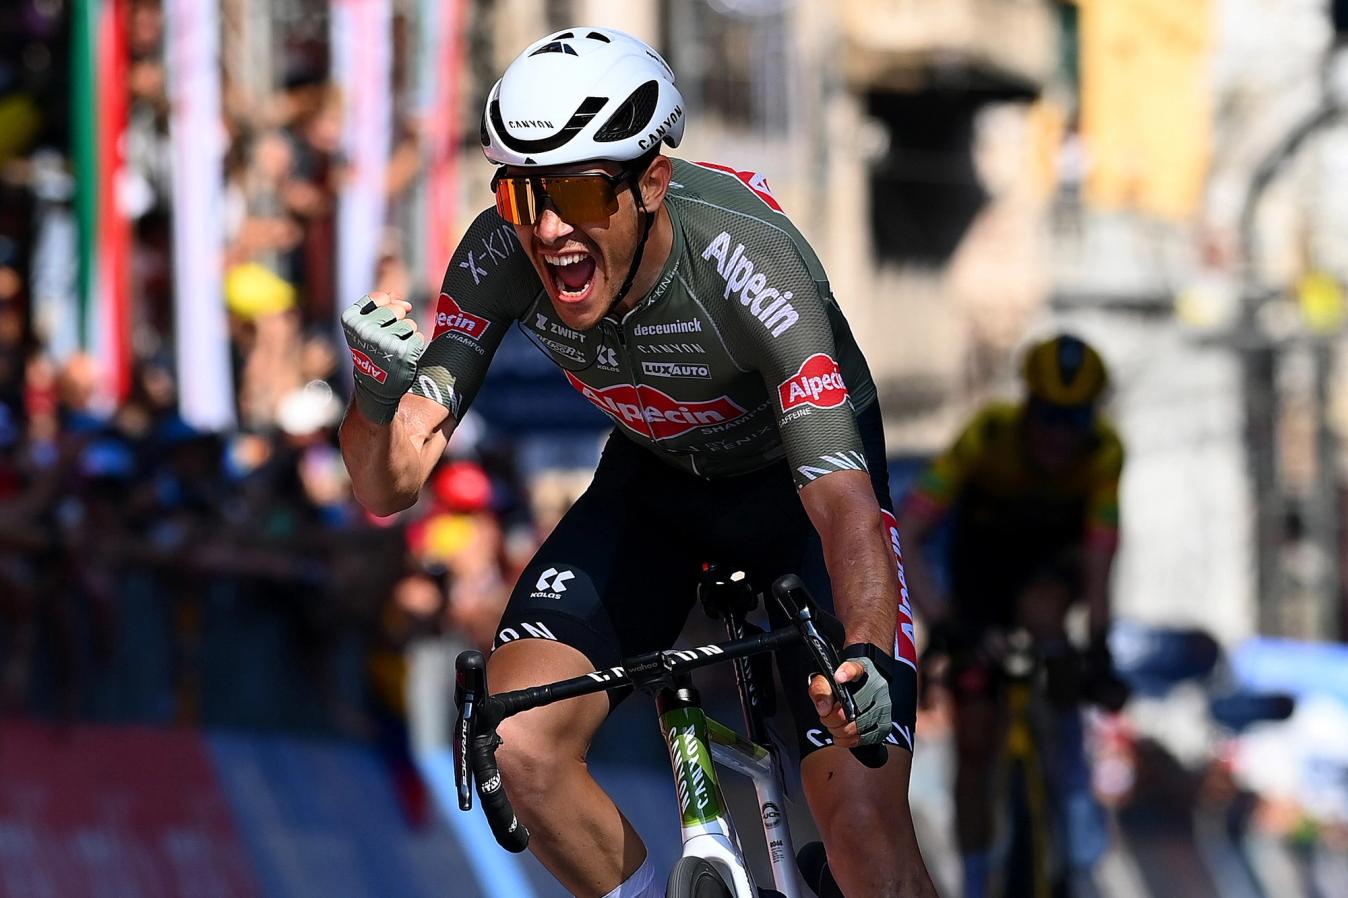 Stefano Oldani won stage 12 of last year's Giro d'Italia ahead of Lorenzo Rota